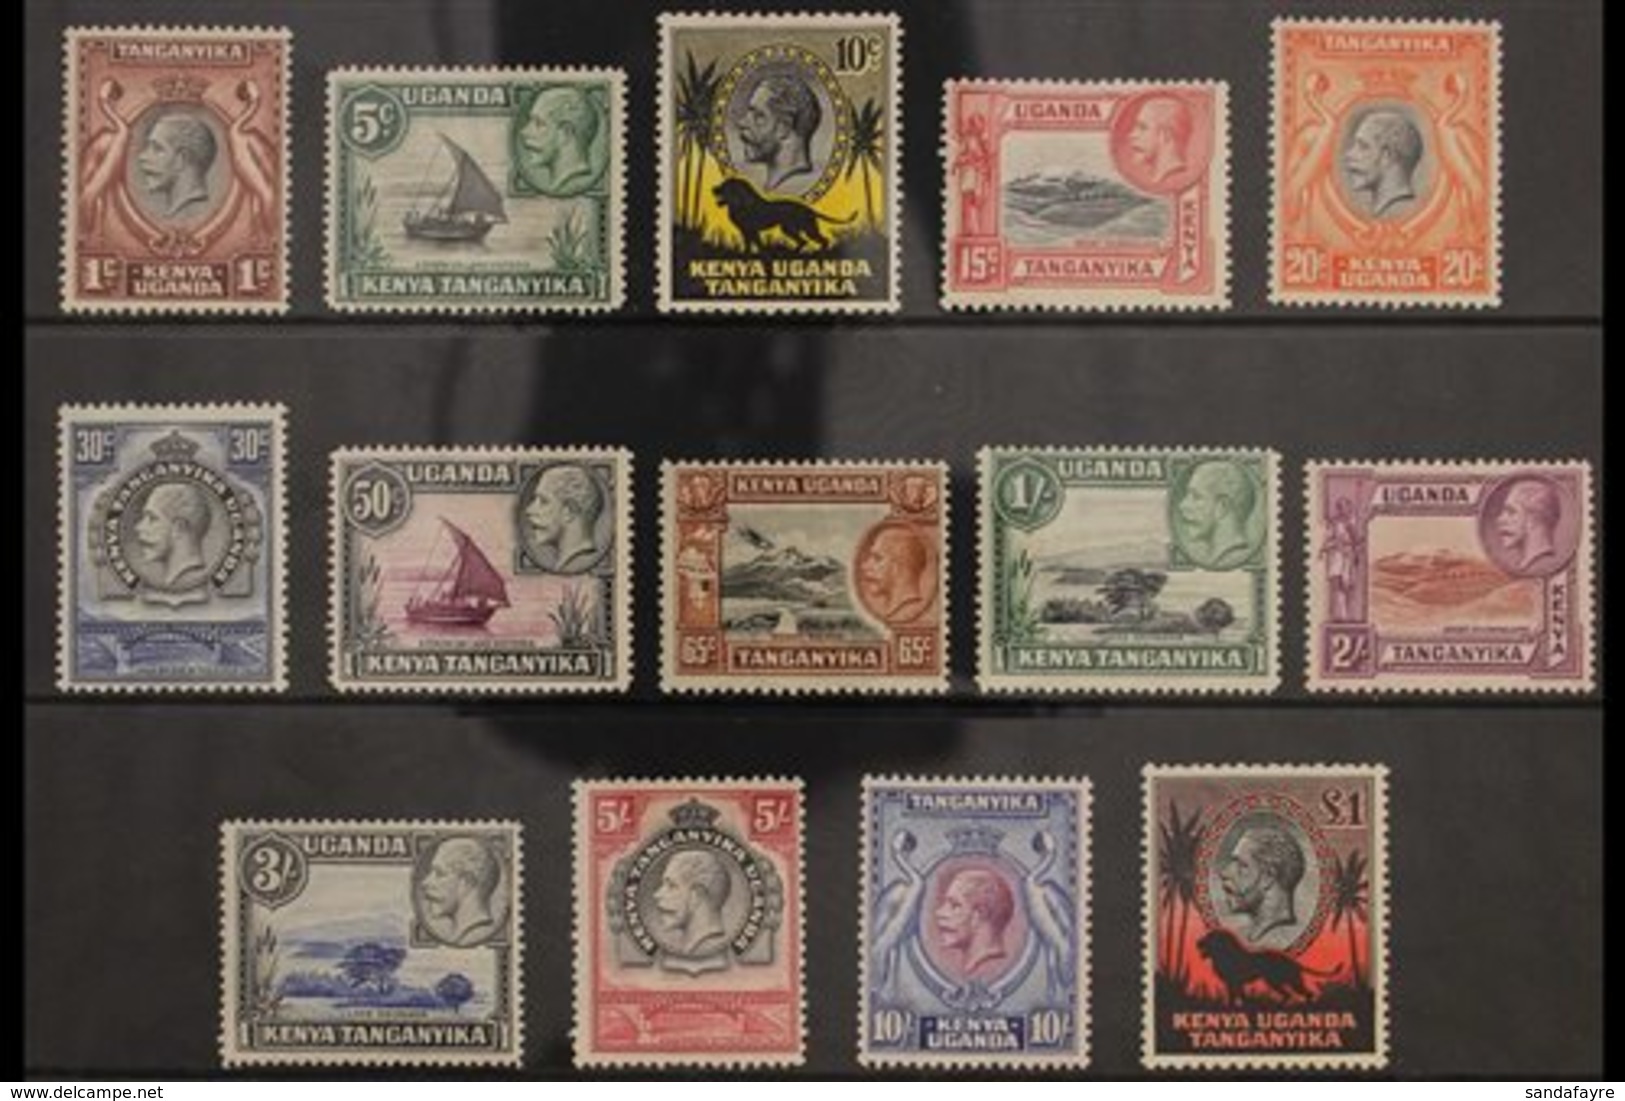 1935-37 Pictorials Complete Set, SG 110/23, Fine Mint, Fresh & Attractive. (14 Stamps) For More Images, Please Visit Htt - Vide